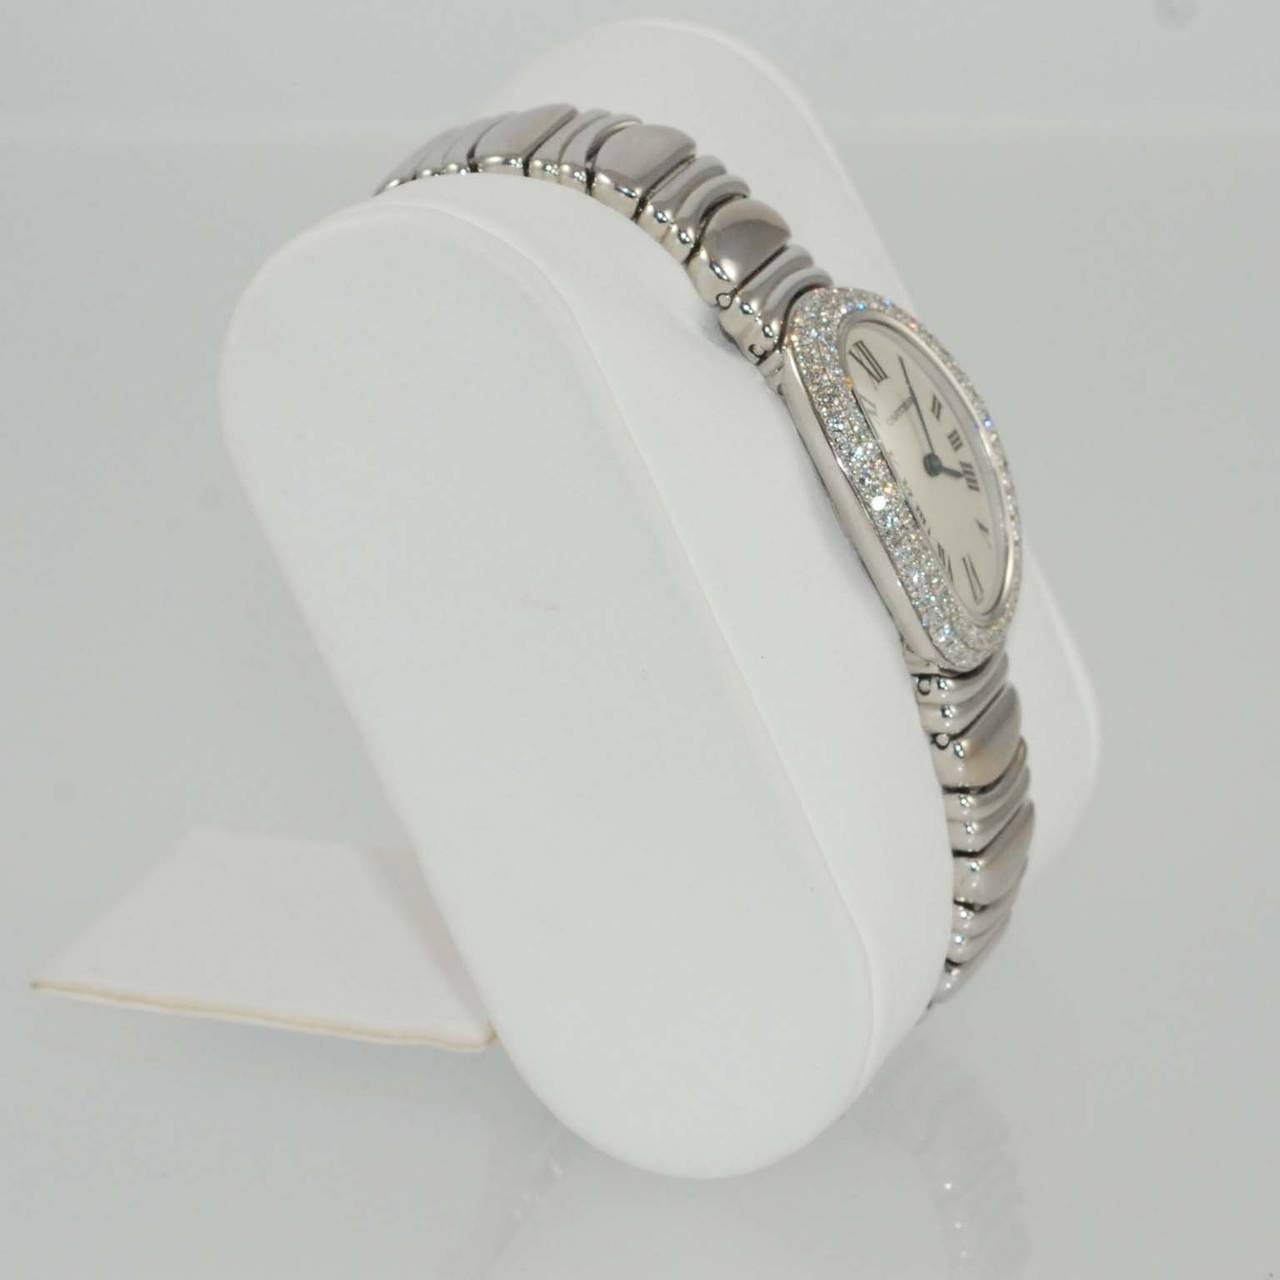 Women's New Cartier Lady's White Gold and Diamond Baignoire Bracelet Watch